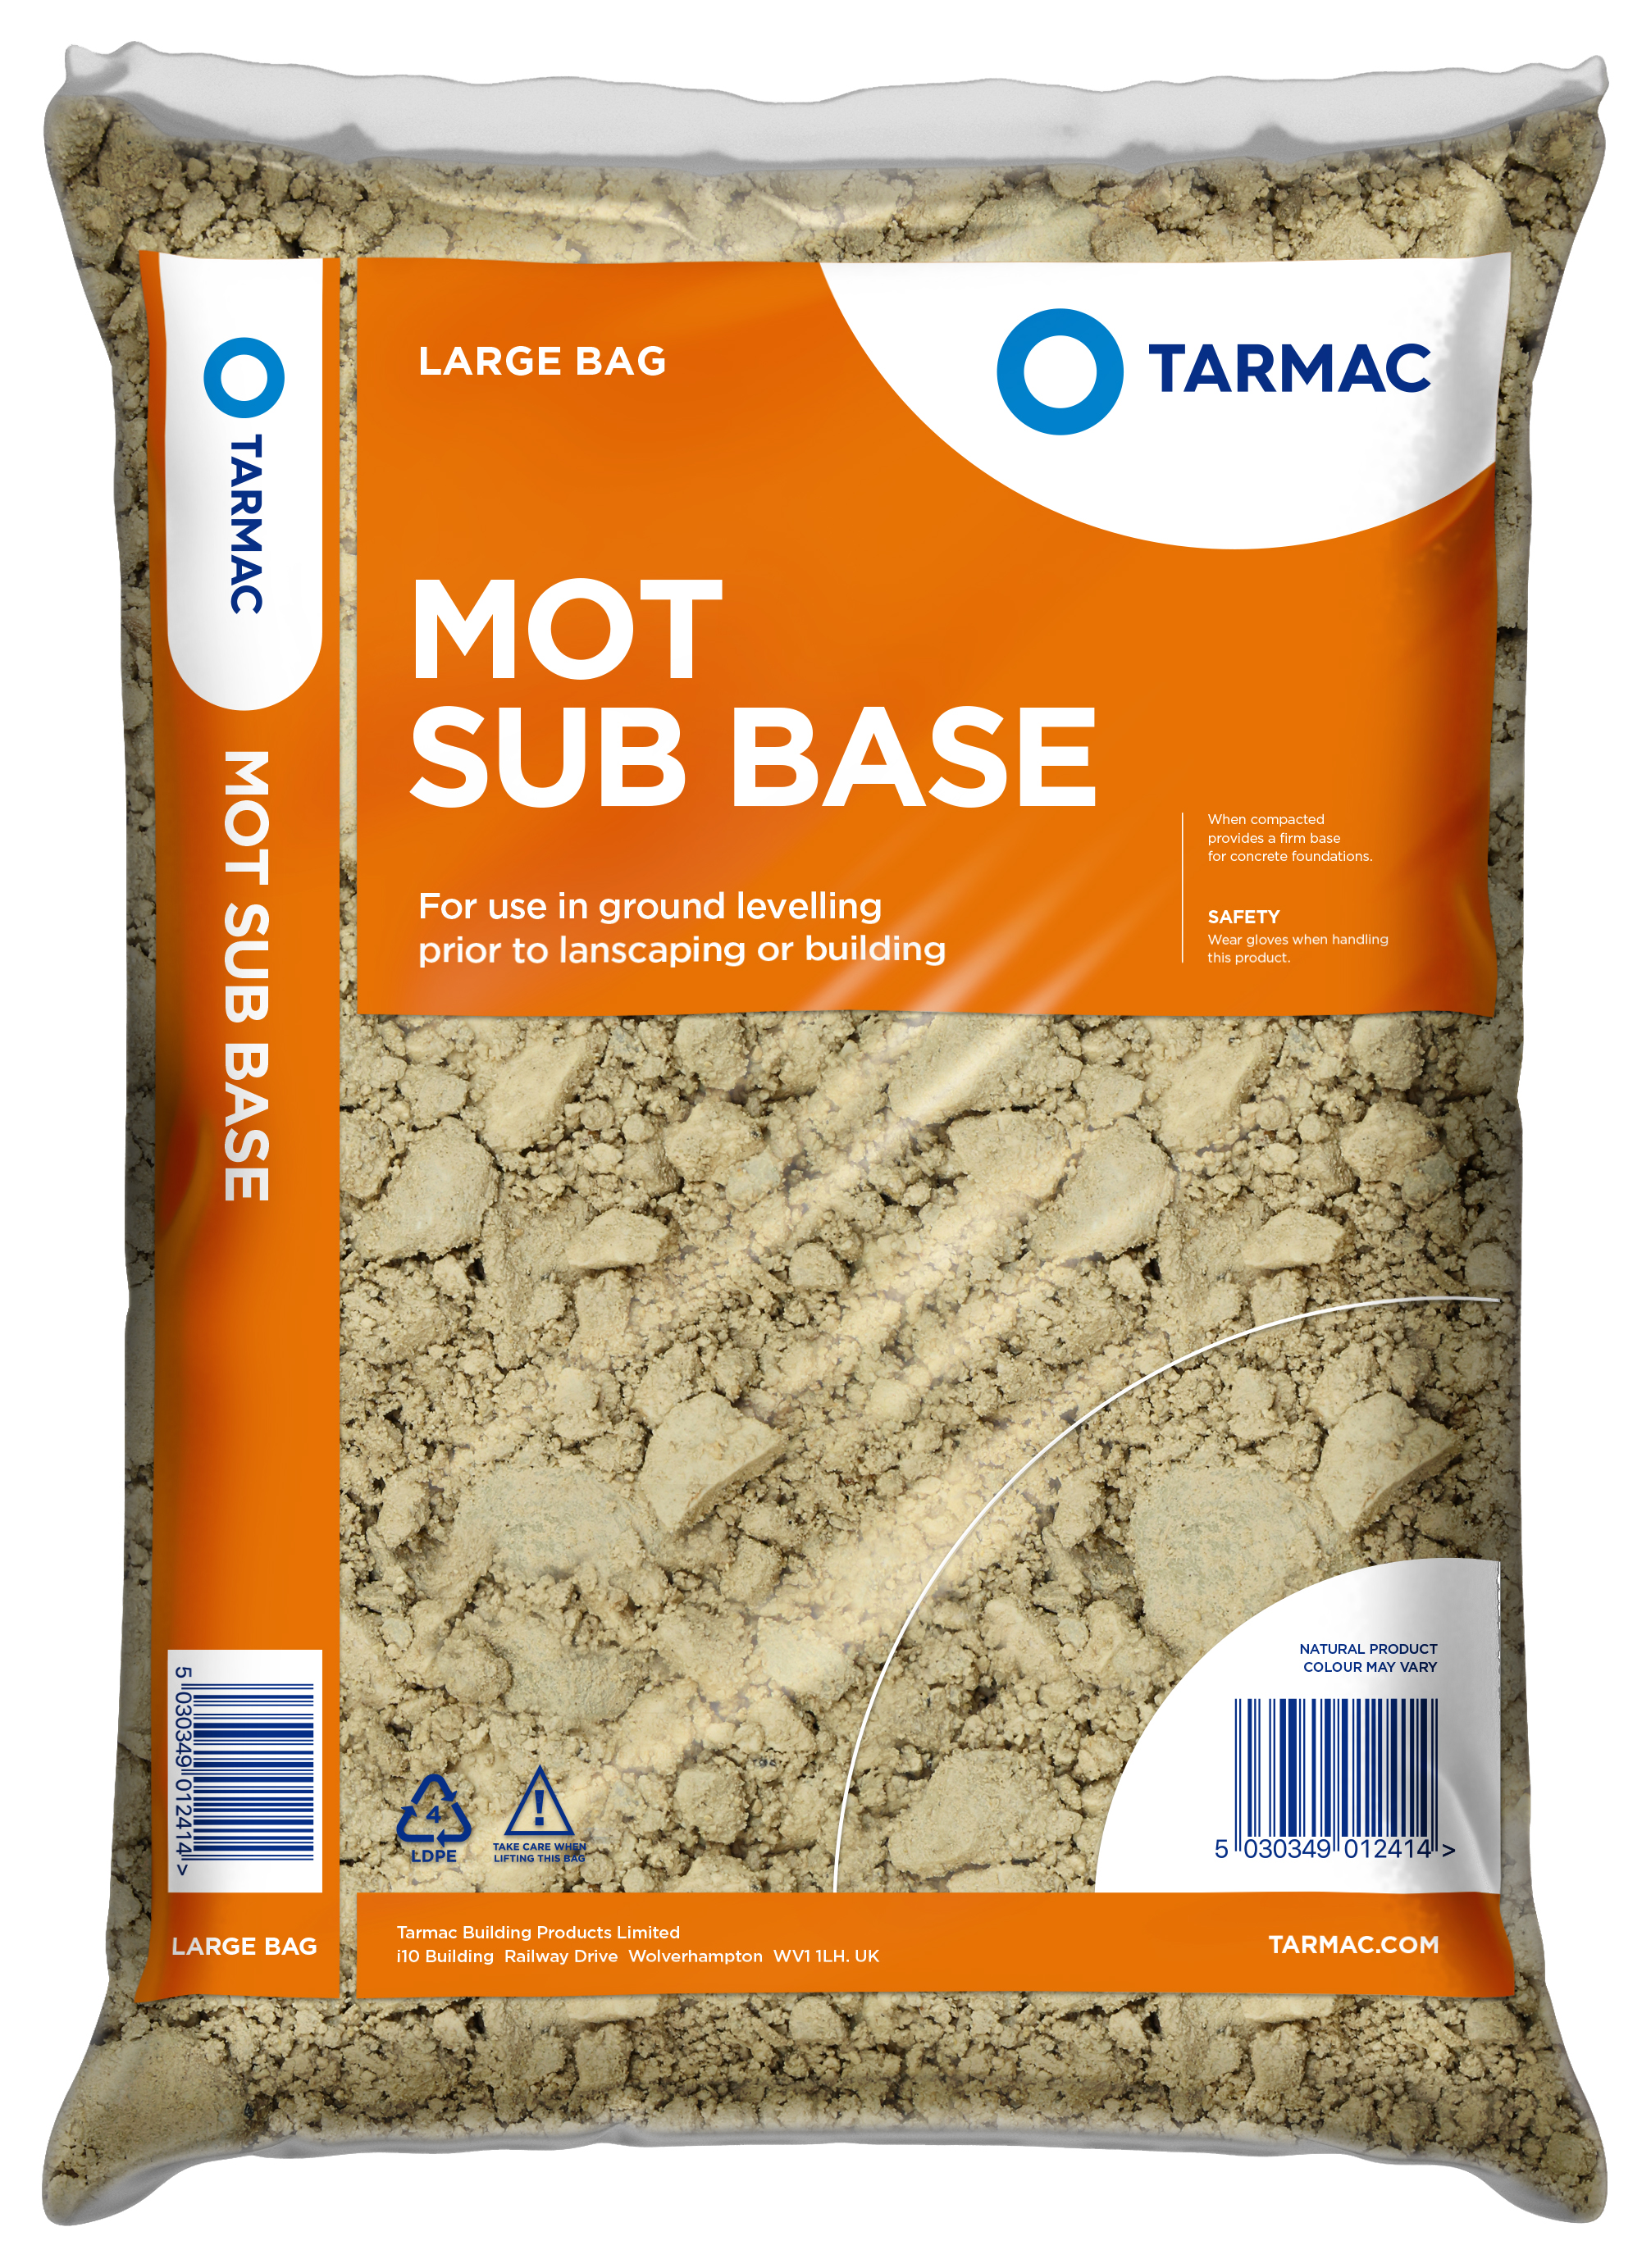 Tarmac Granular Sub Base Mot 1 - Major Bag